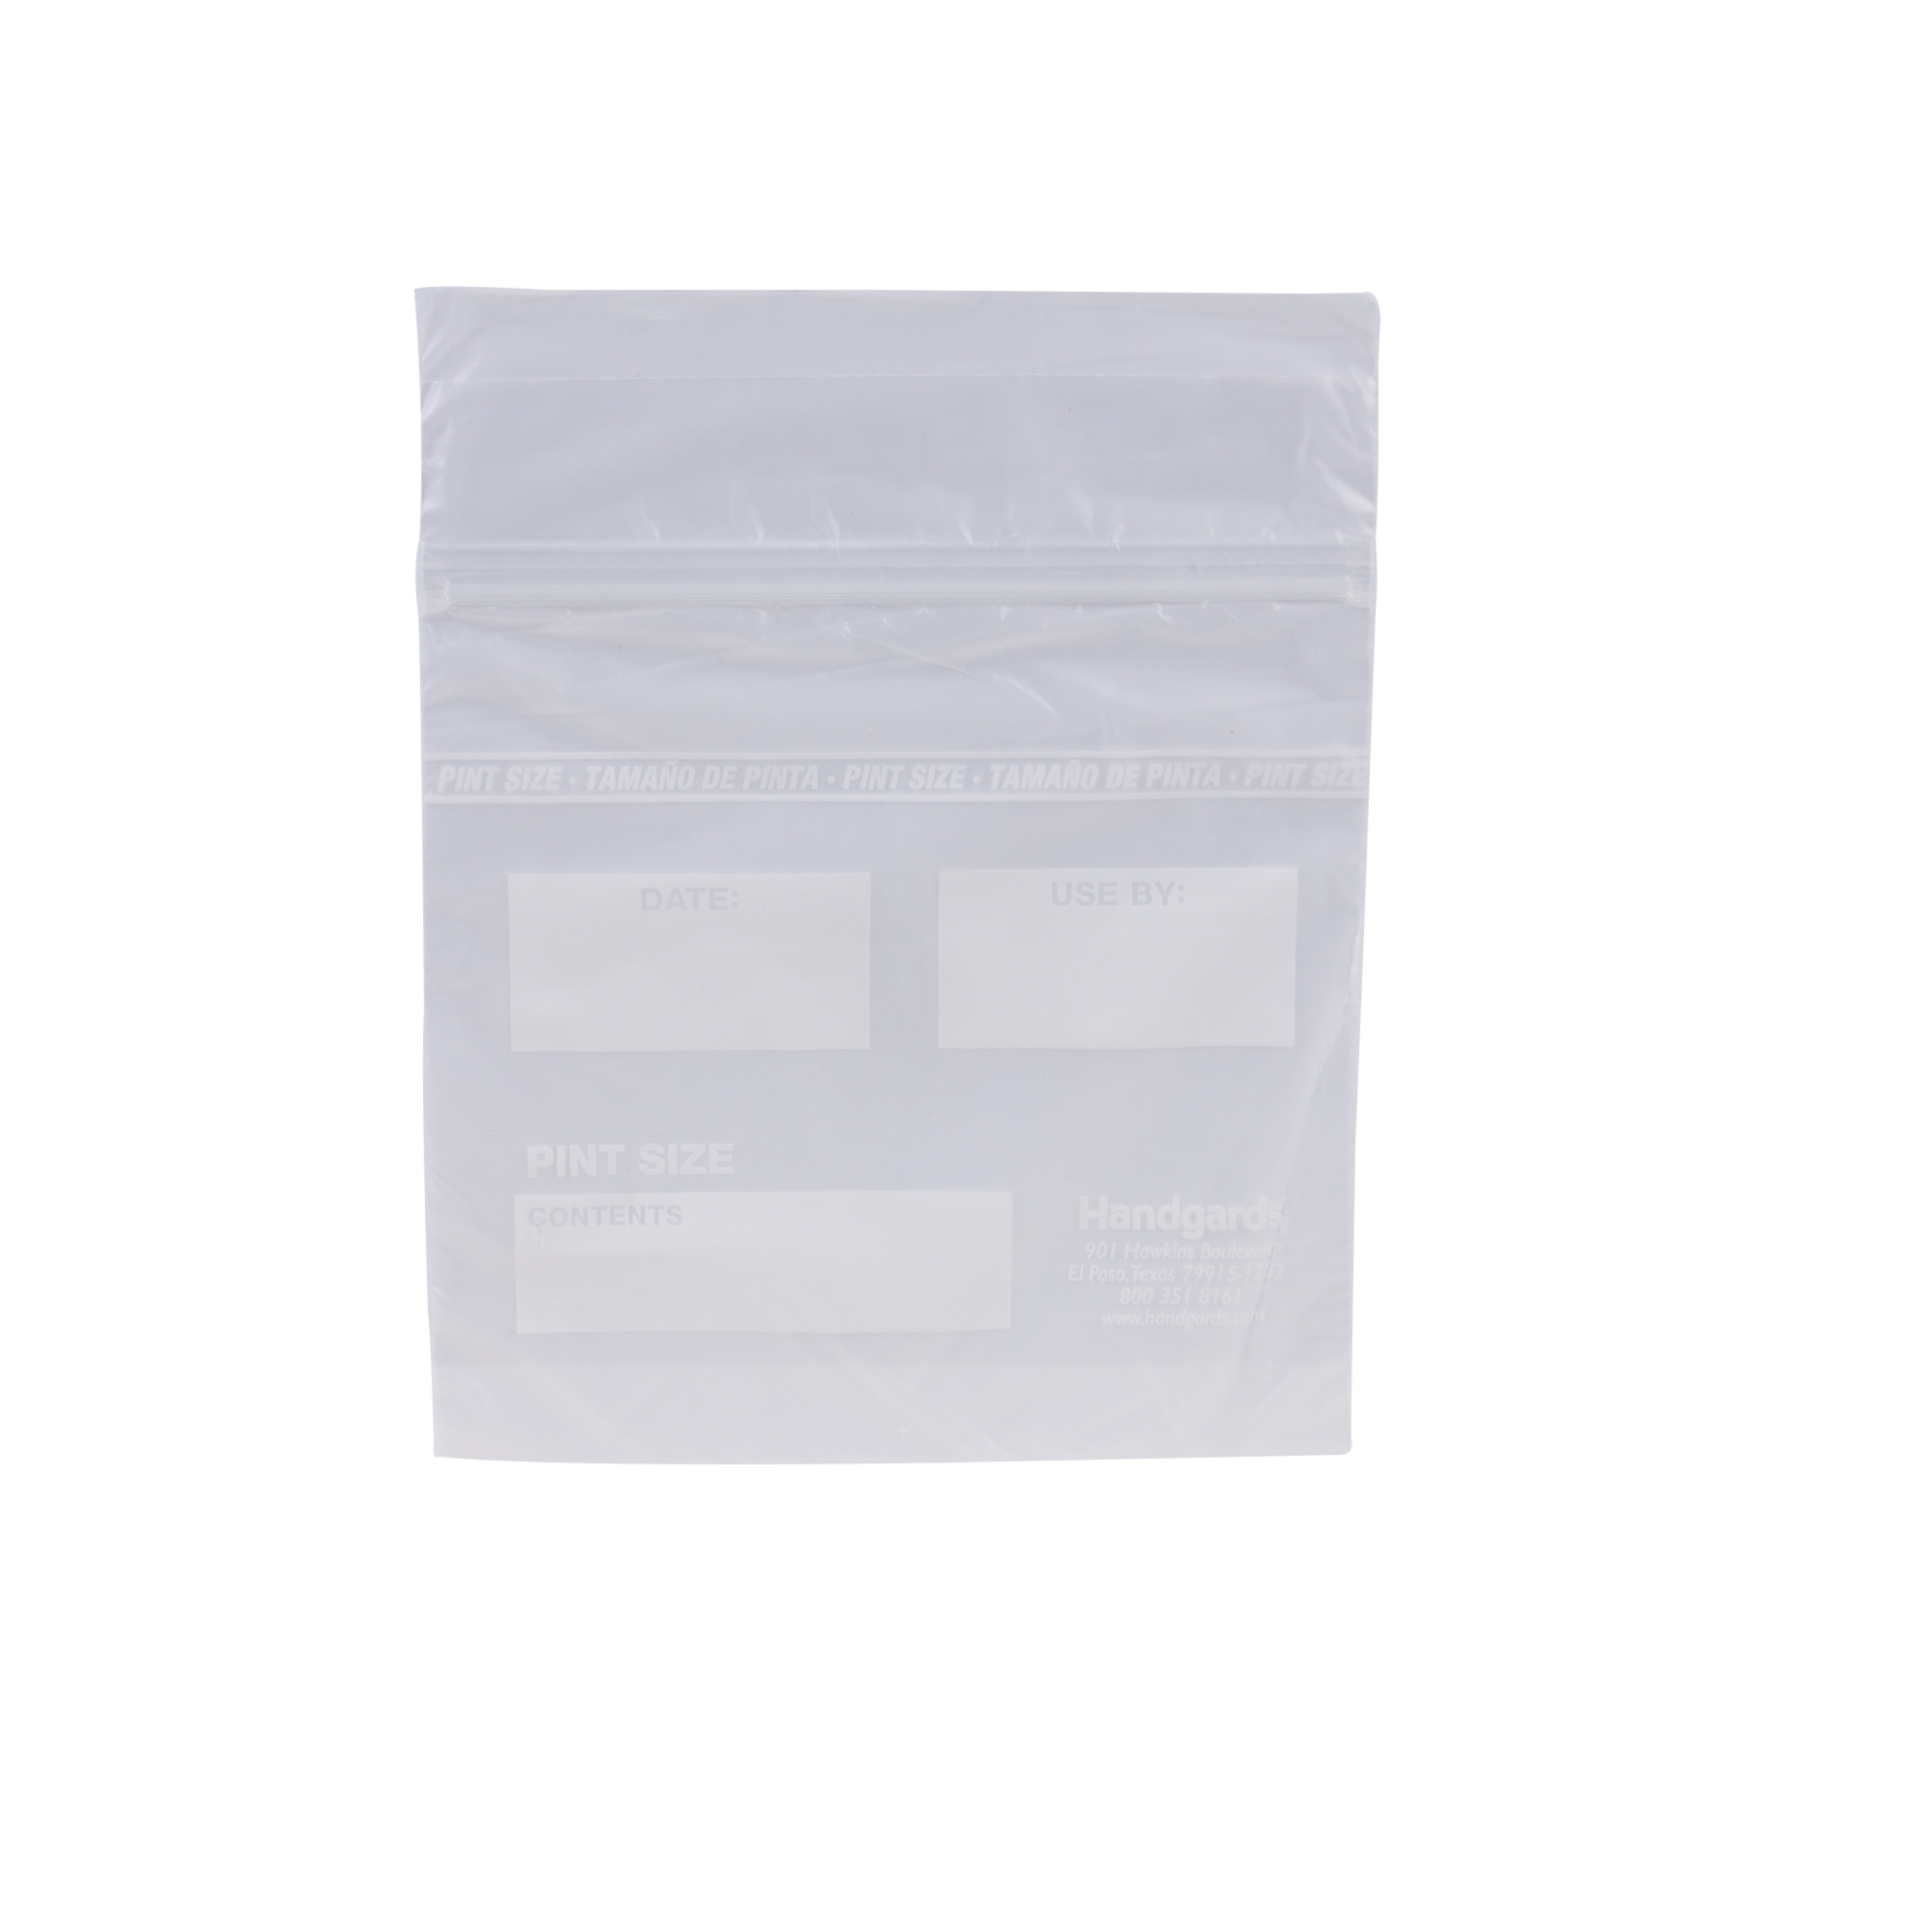 Zipgards® Low Density Freezer Reclosable Disposable Bags – Pint Size –  Handgards®